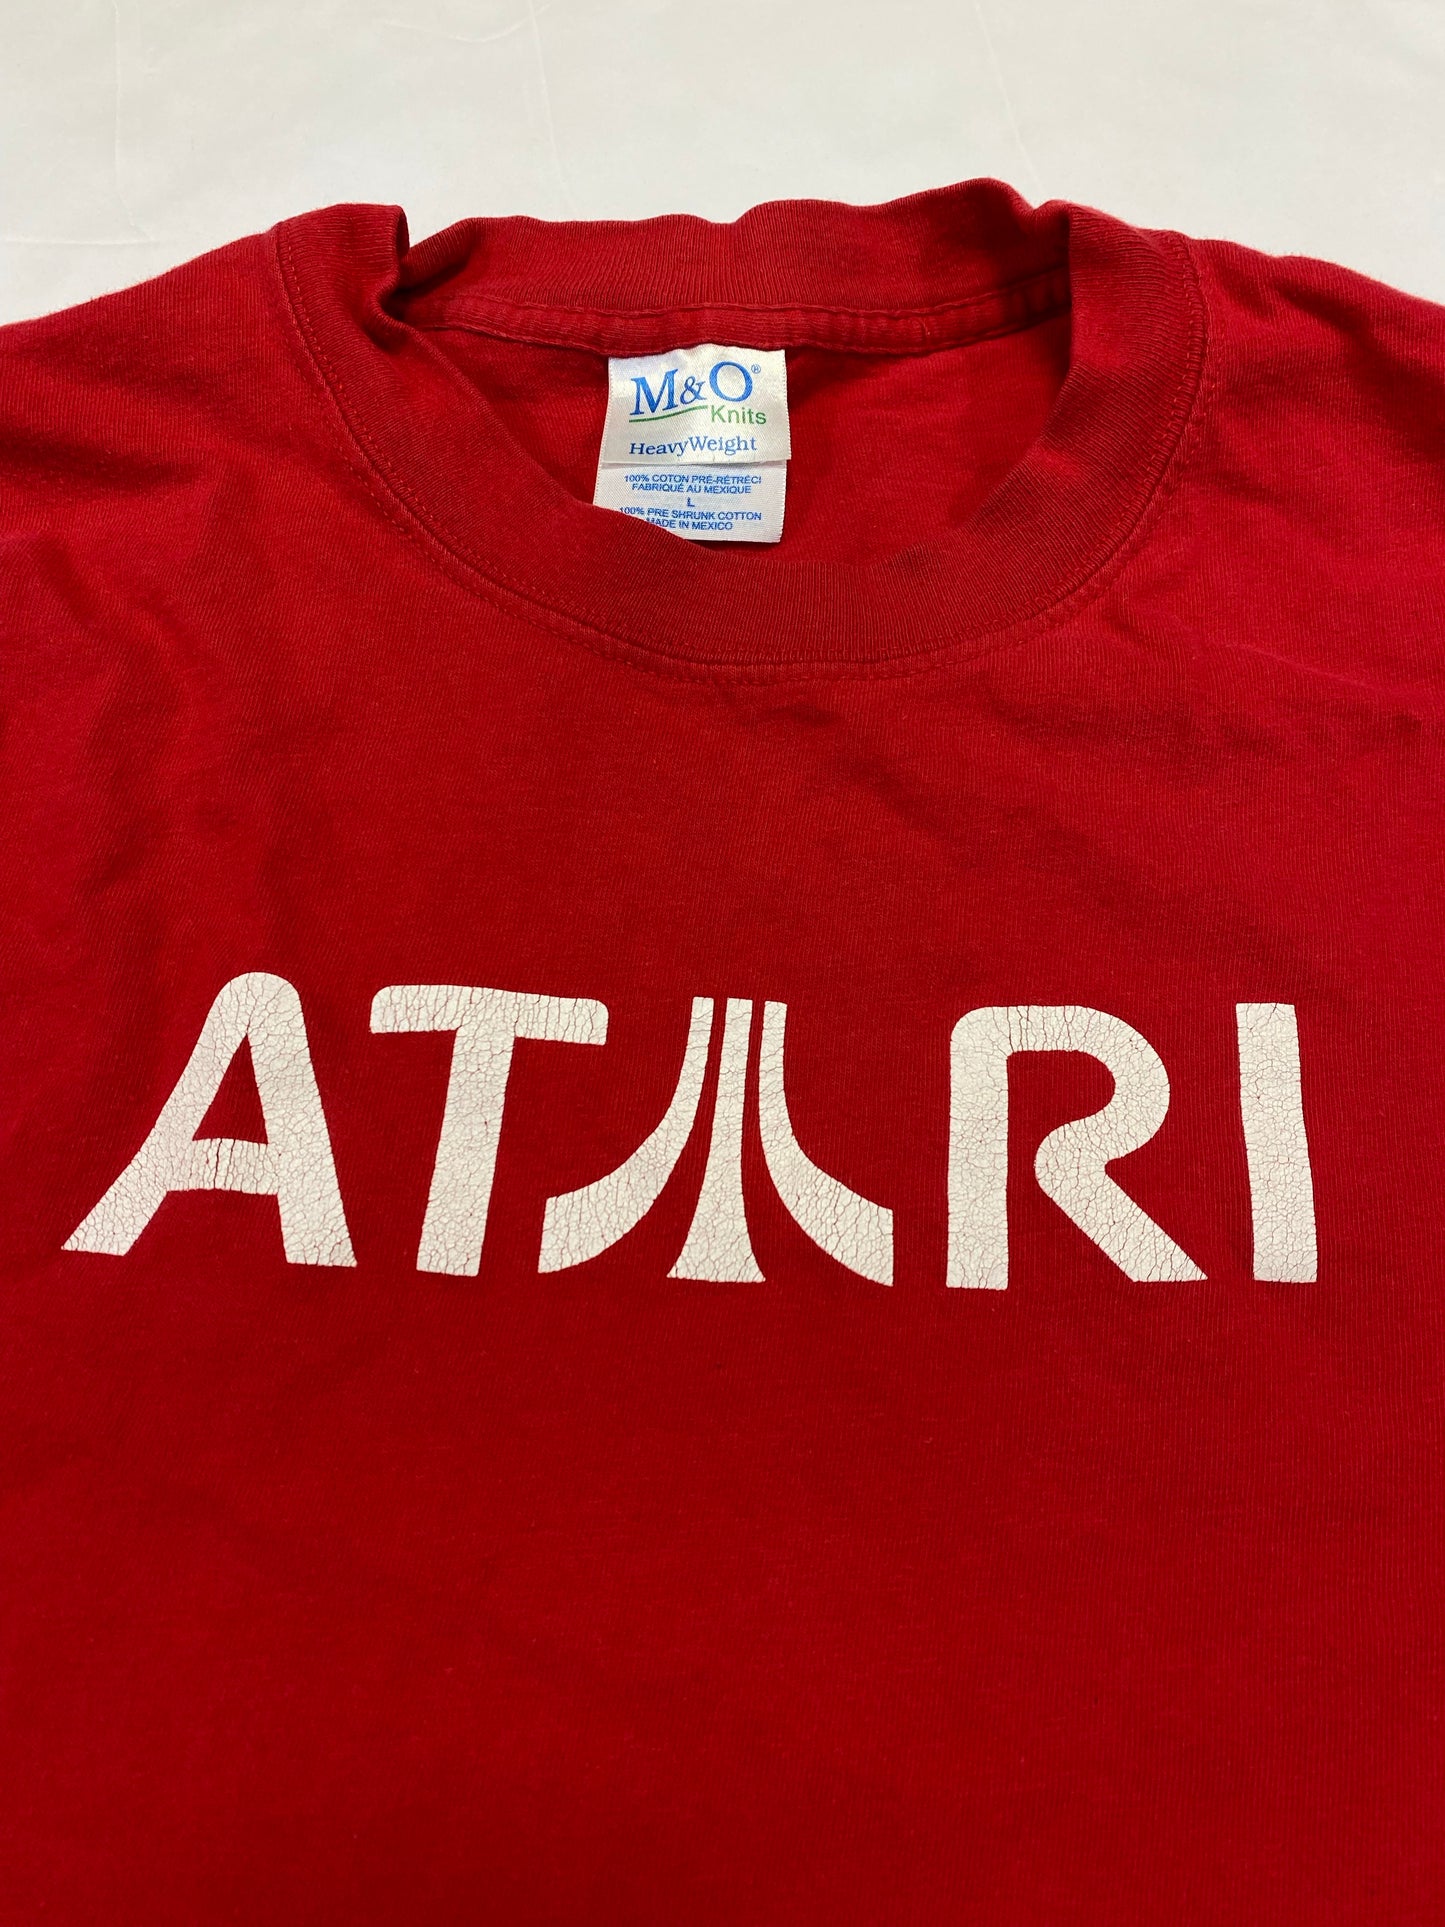 2000’s Atari Spellout M&O T-Shirt